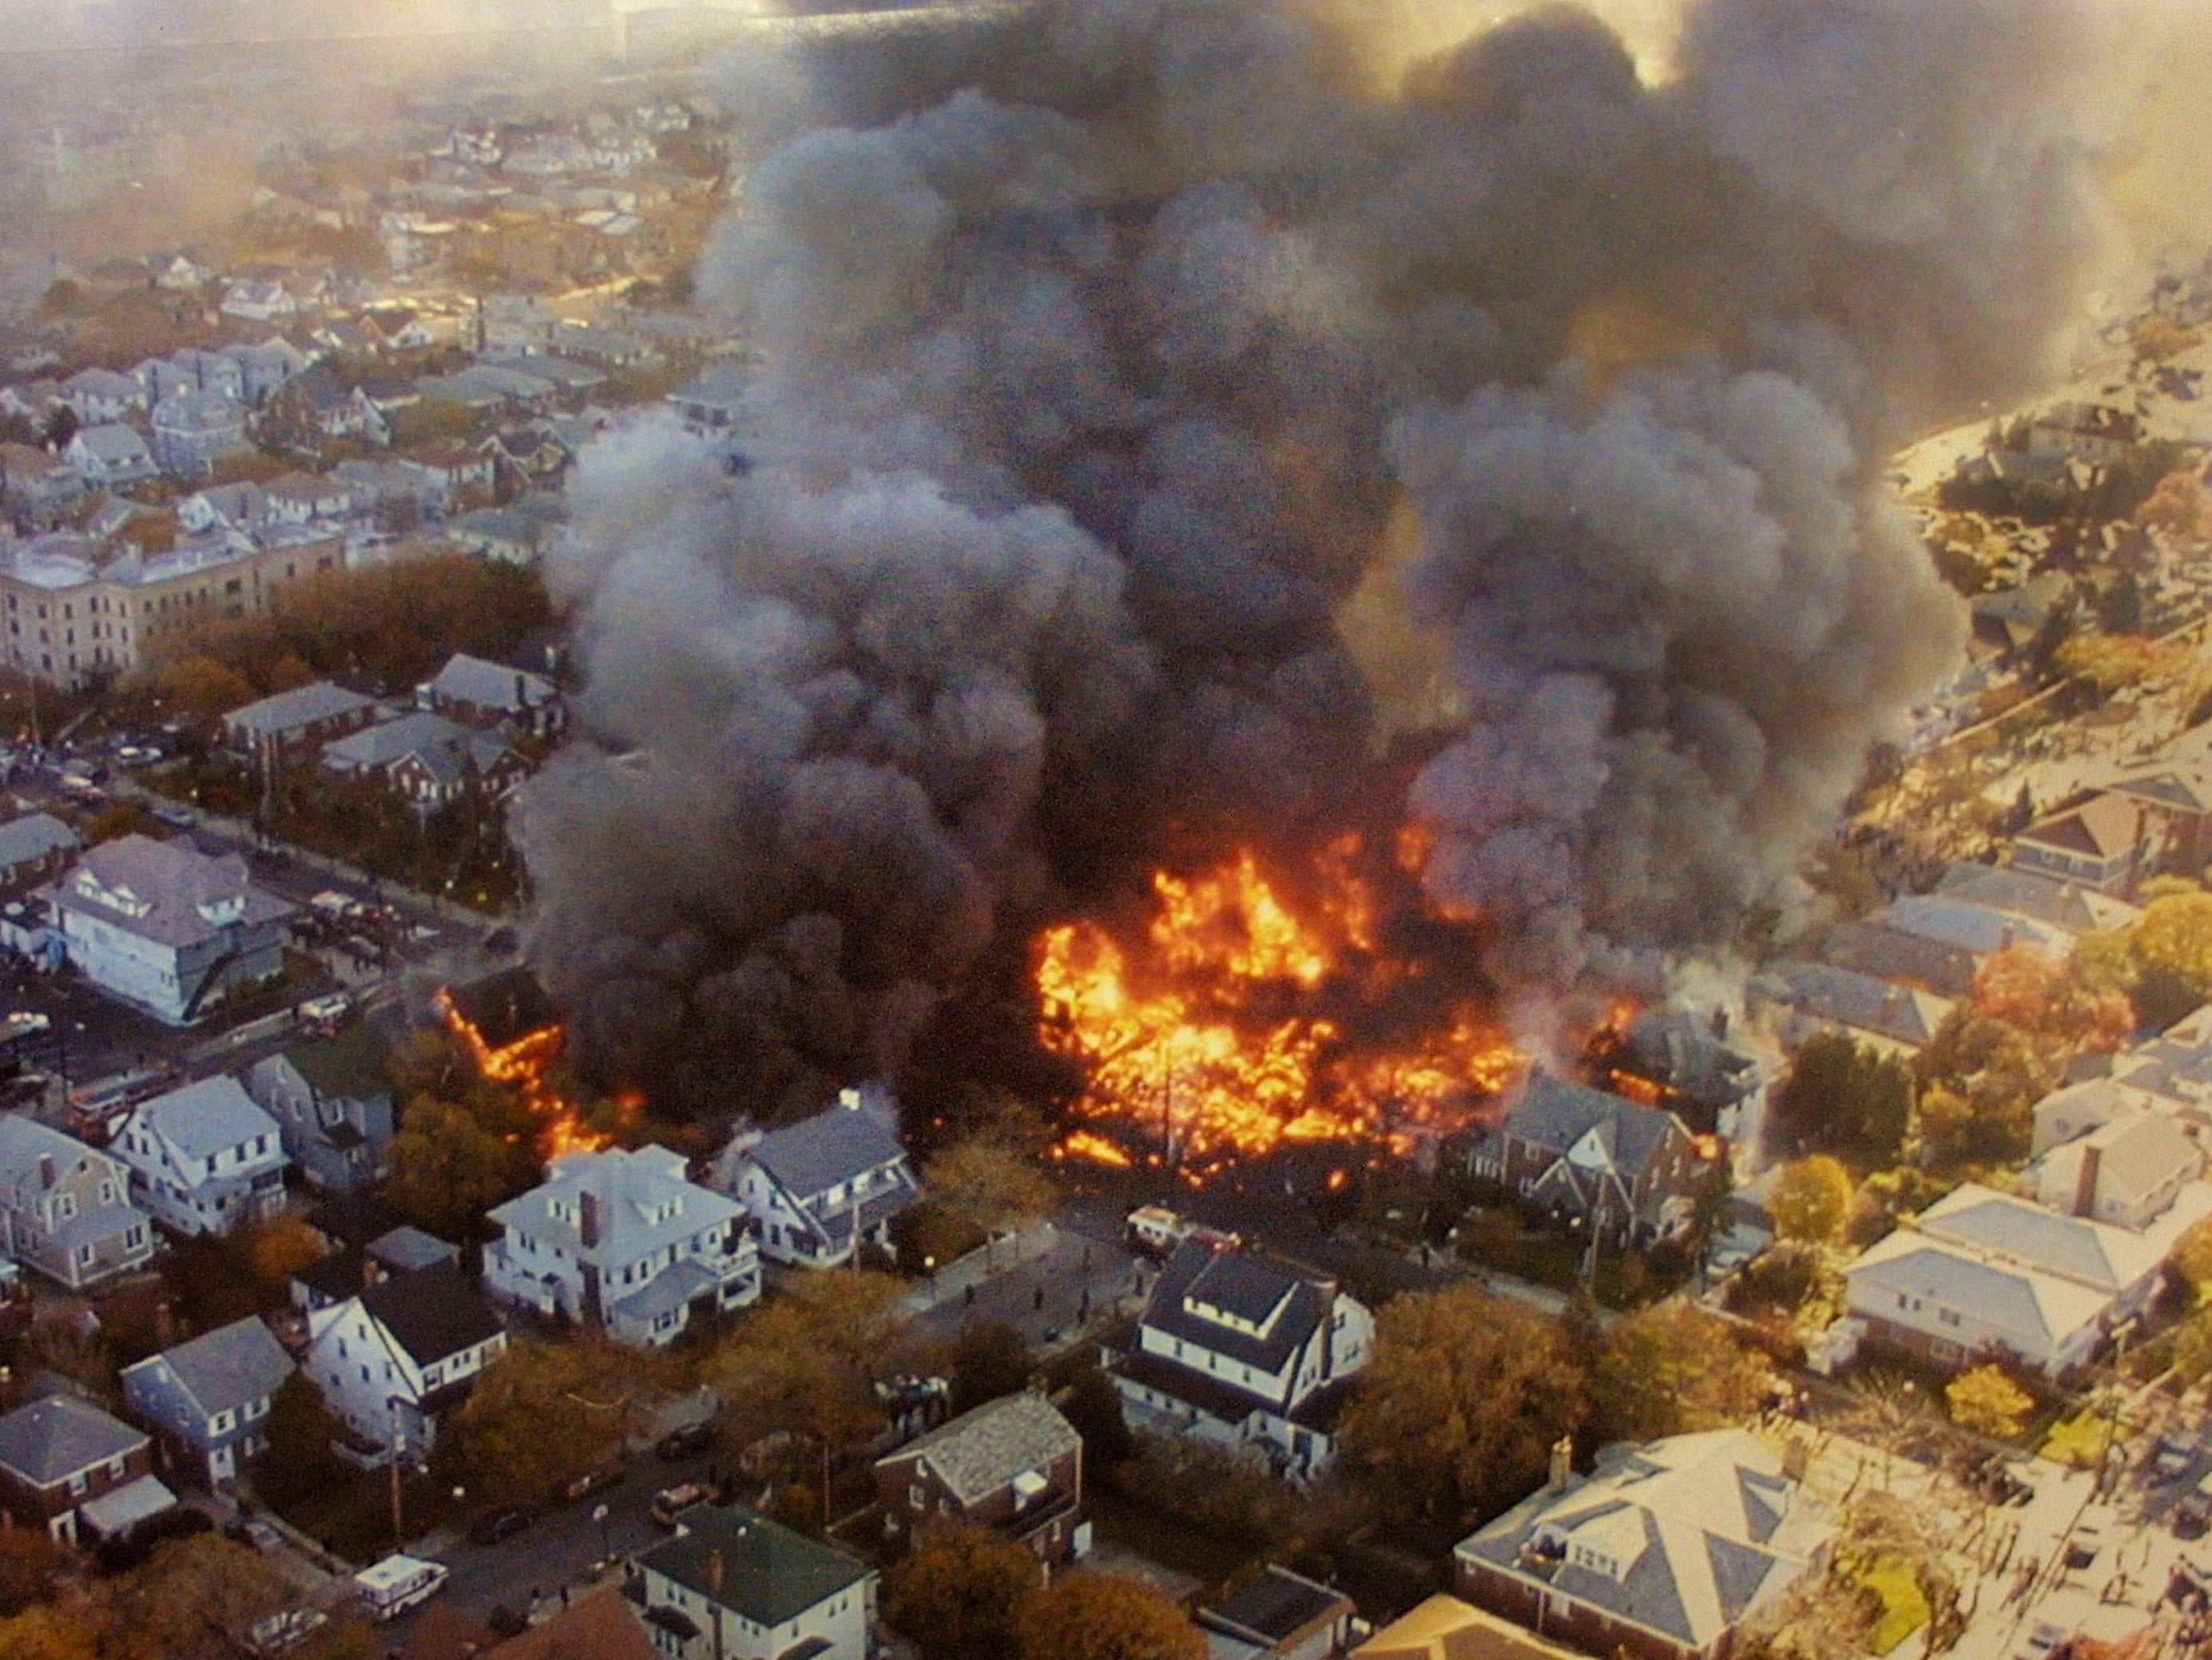 The wreckage of American Airlines Flight 587 burns in the Rockaway neighborhood of Queens, New York City, on 12 November 2001